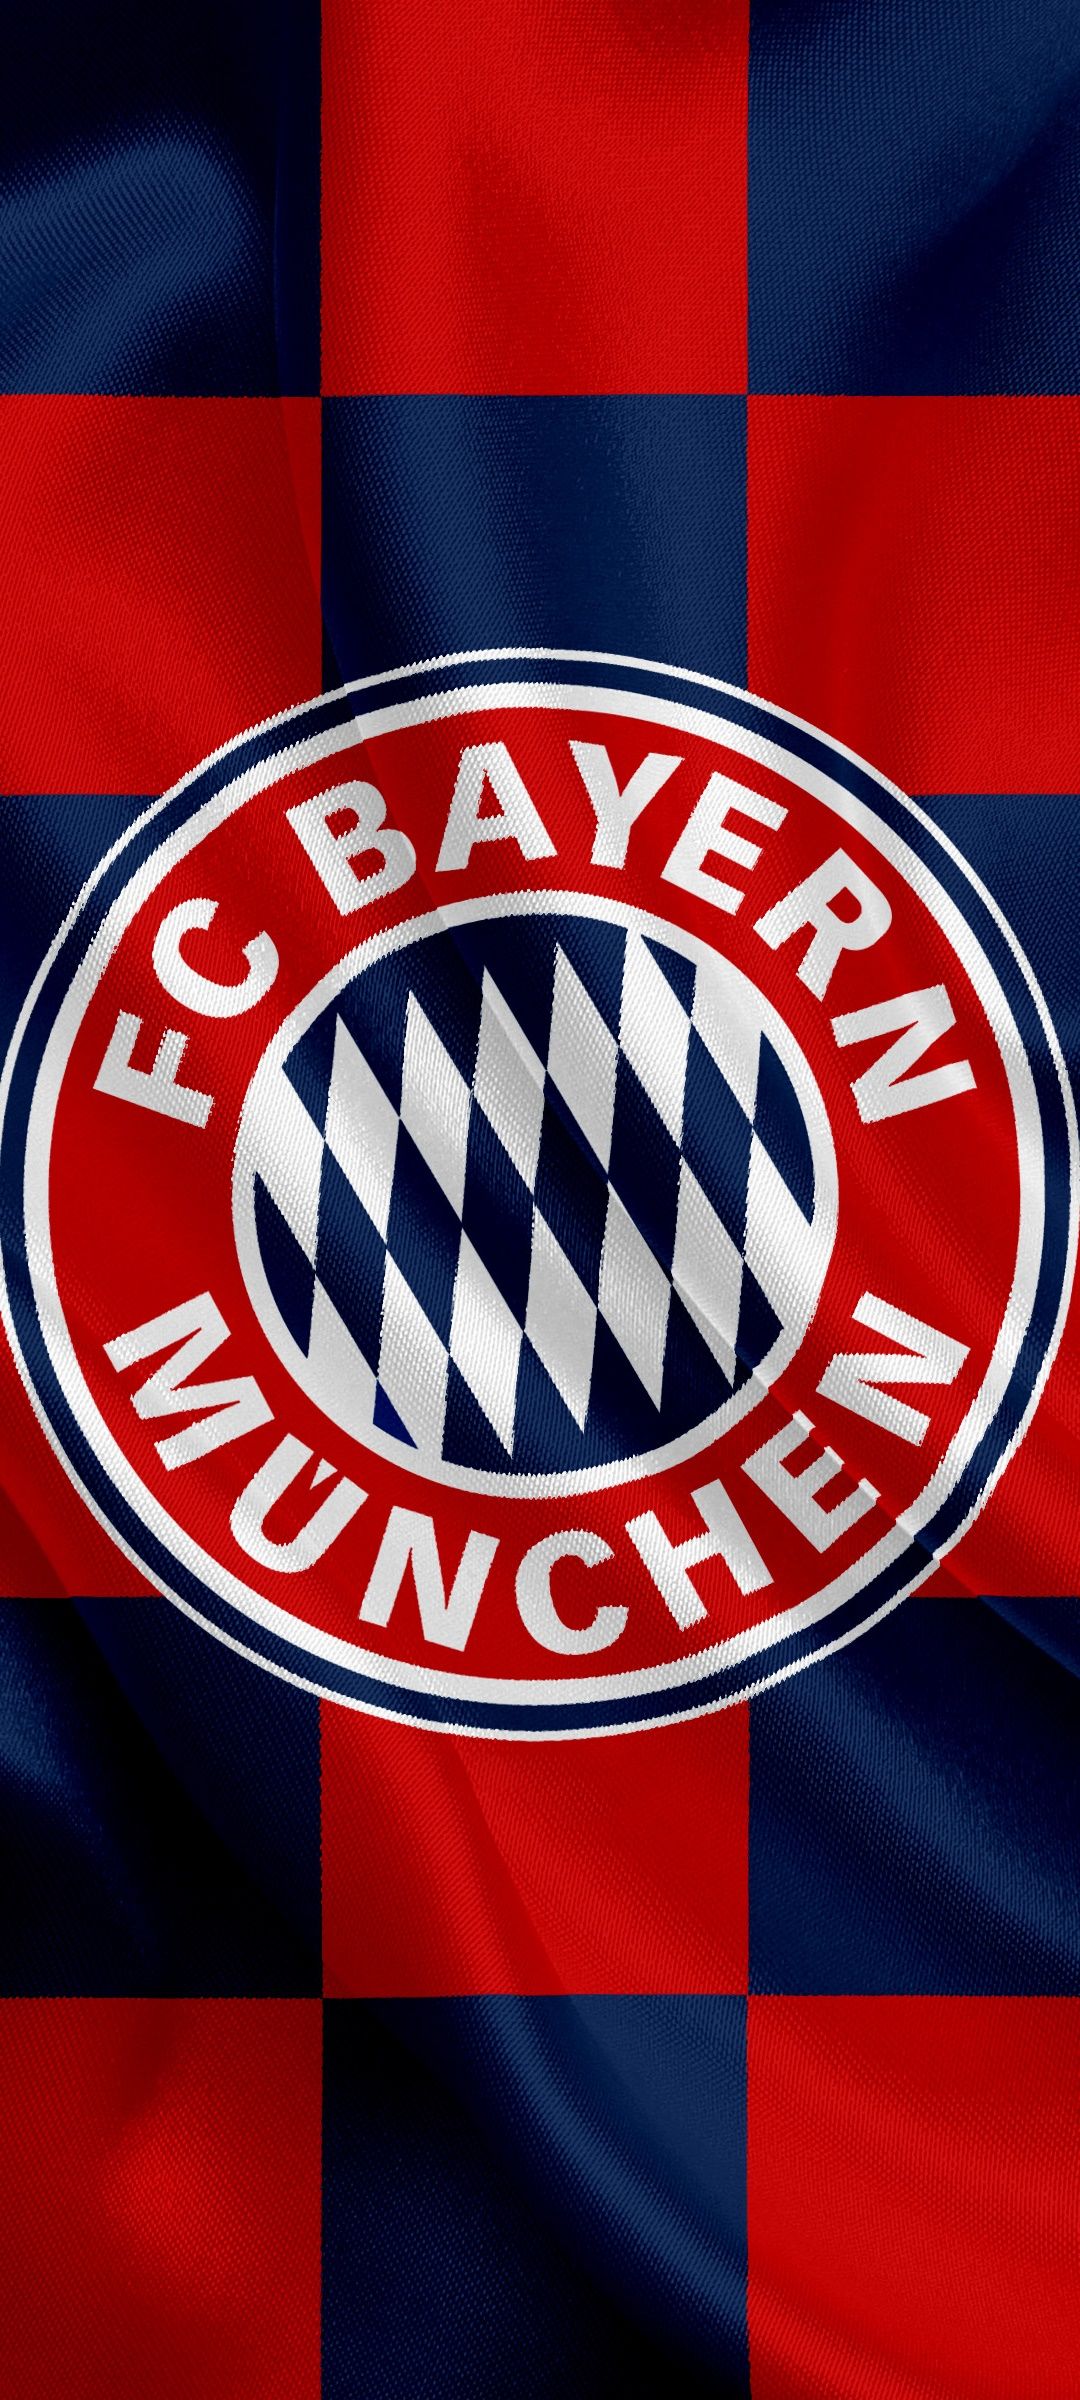  FC Bayern München Hintergrundbild 1080x2400. FC Bayern Munich phone wallpaper 1080P, 2k, 4k Full HD Wallpaper, Background Free Download